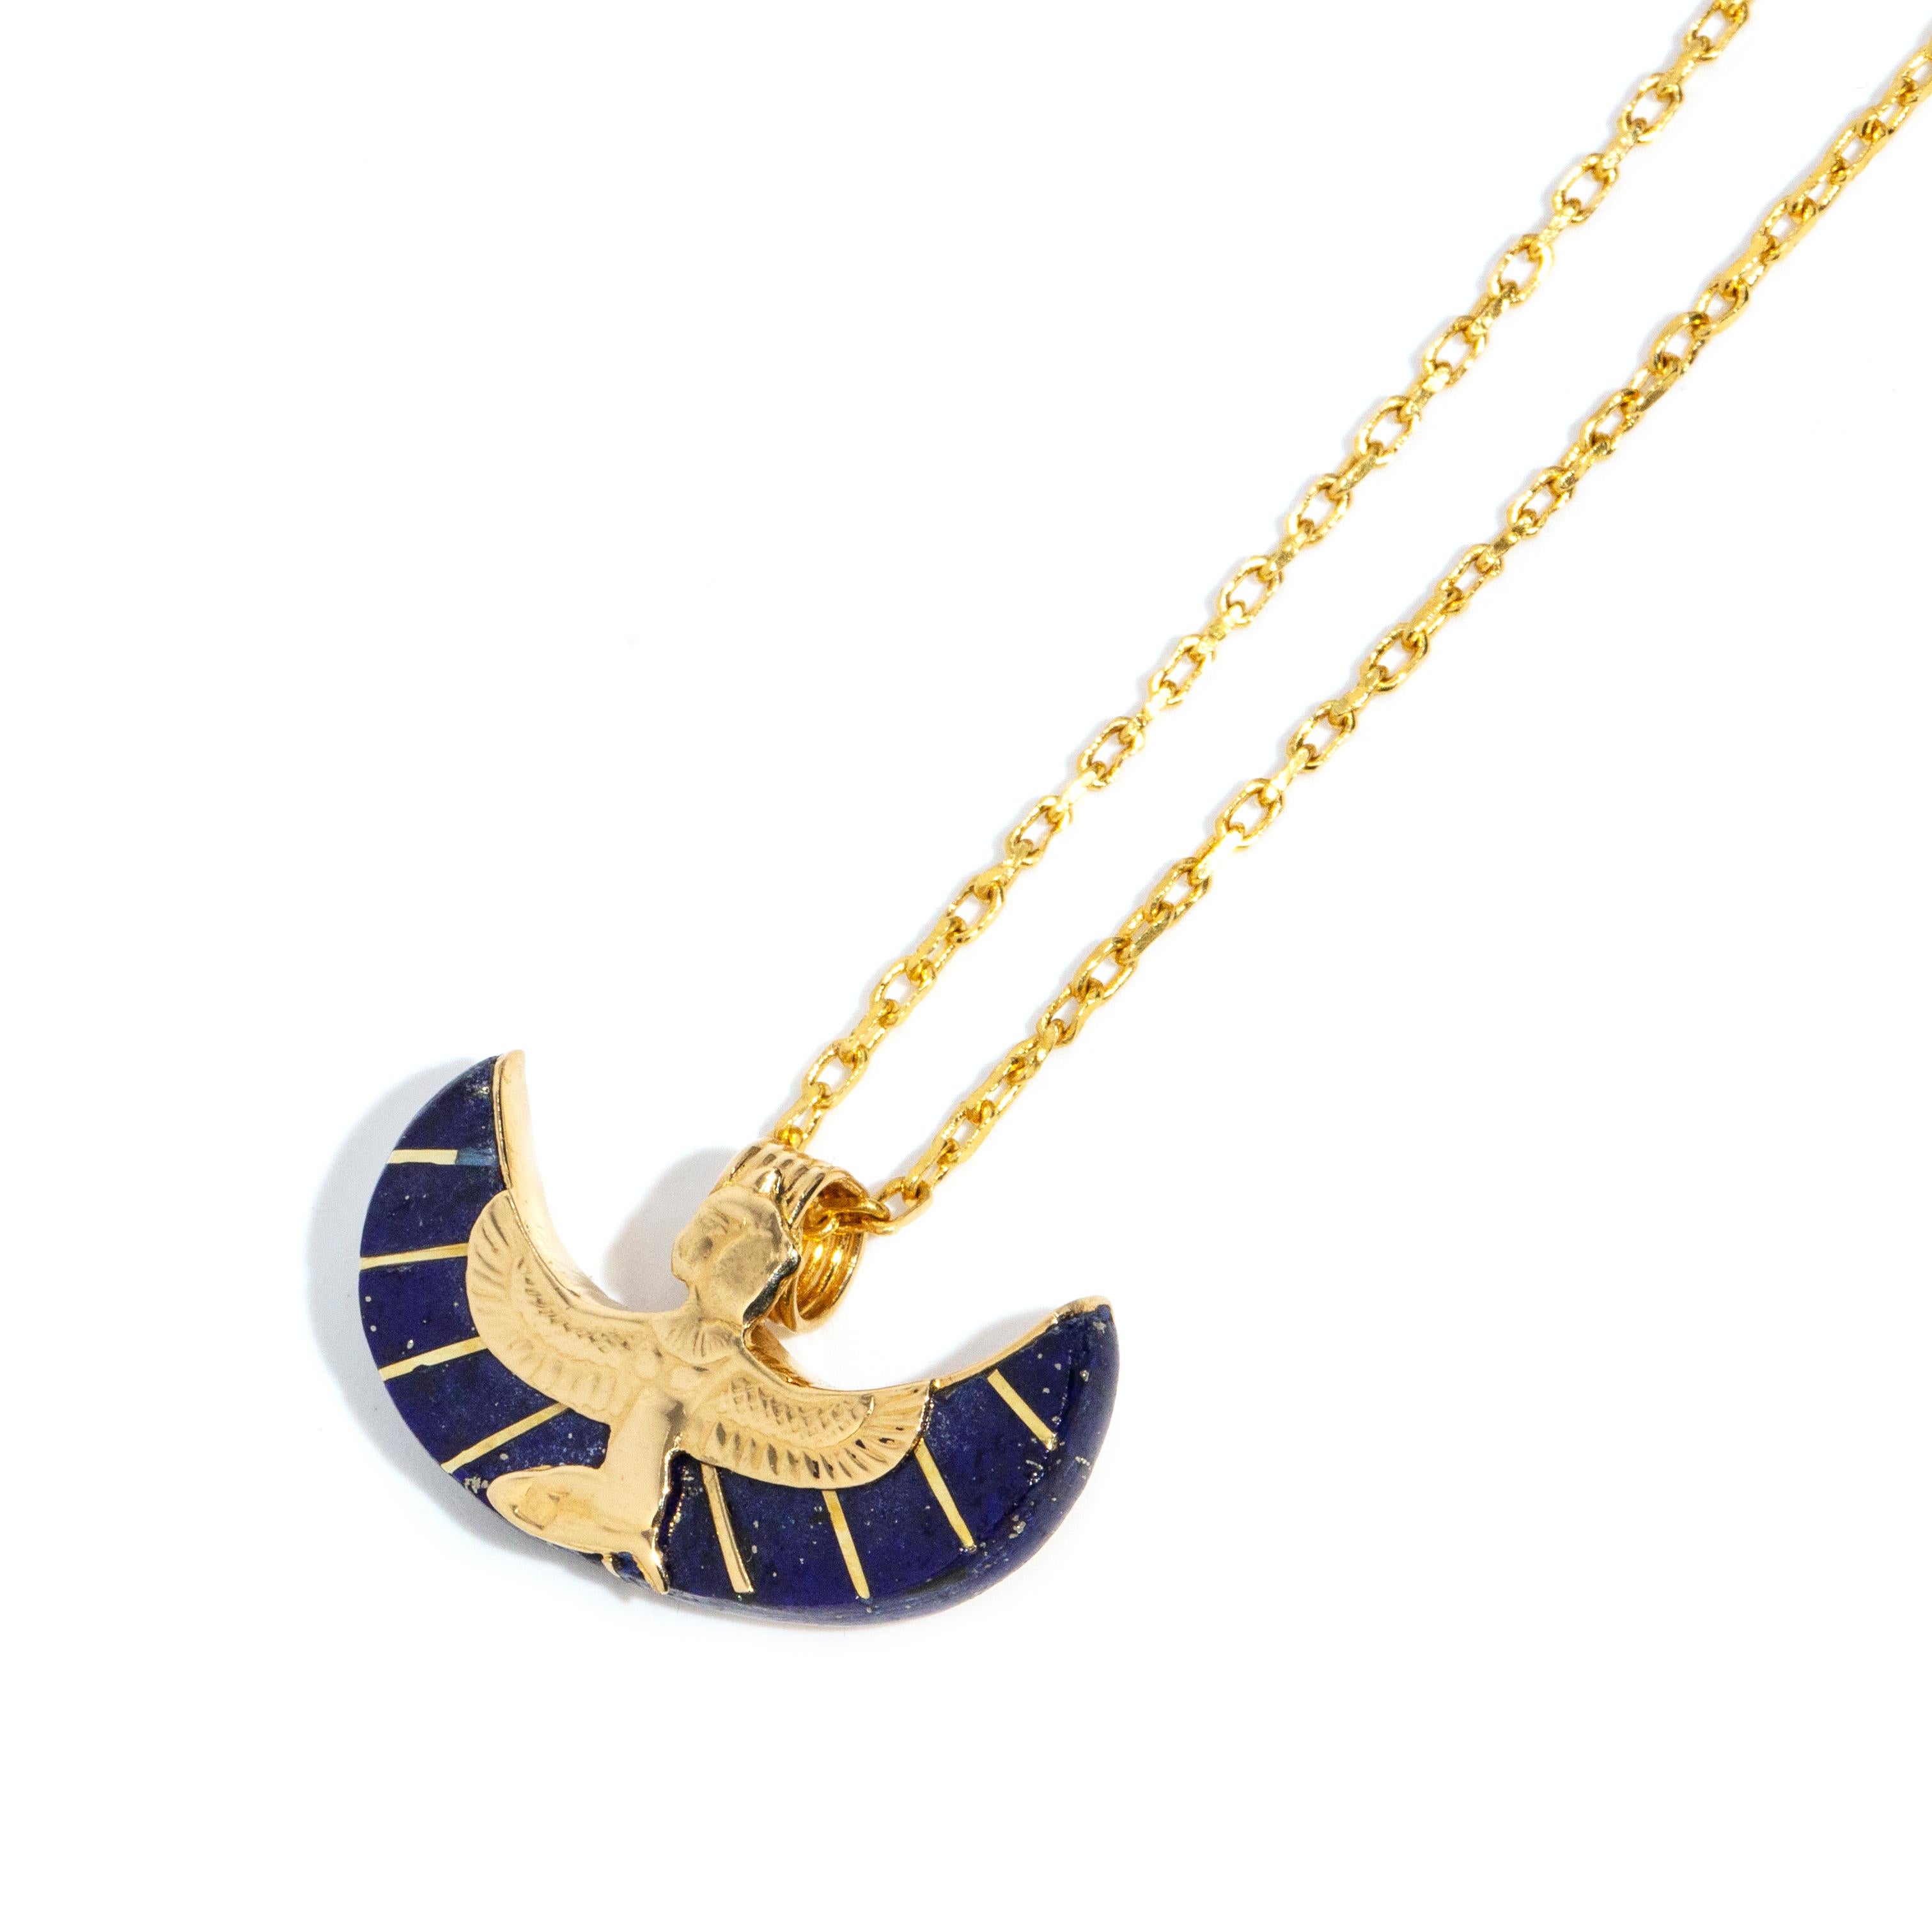 Modern Vintage 1980s Egyptian Deity Inspired Lapis Lazuli Pendant & Chain 18 Carat Gold